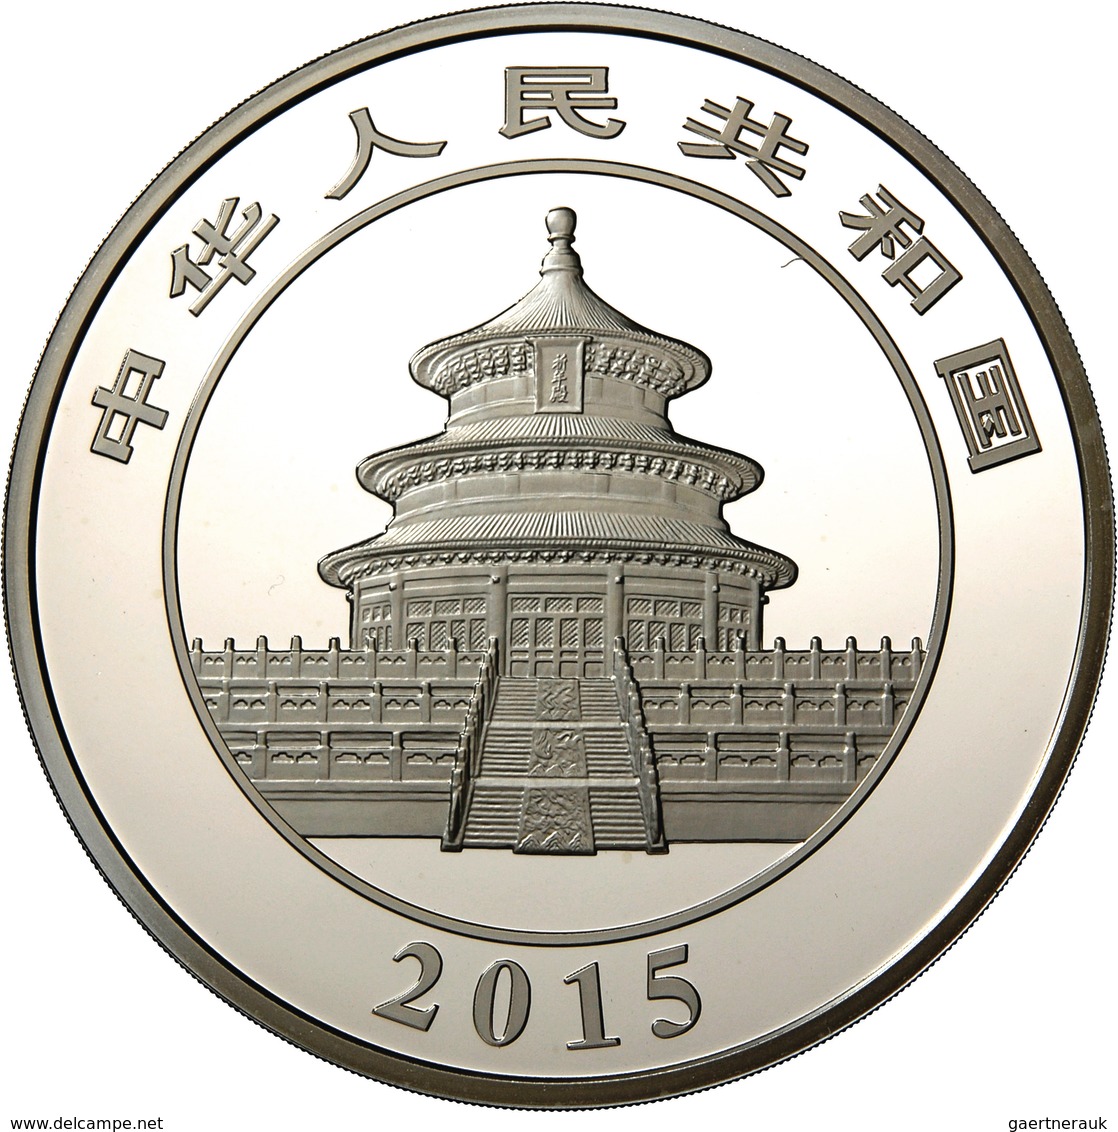 China - Volksrepublik: 300 Yuan 2015, Silber Panda, 1 Kg 999/1000 Silber. Inklusive Zertifikat, Etui - Chine